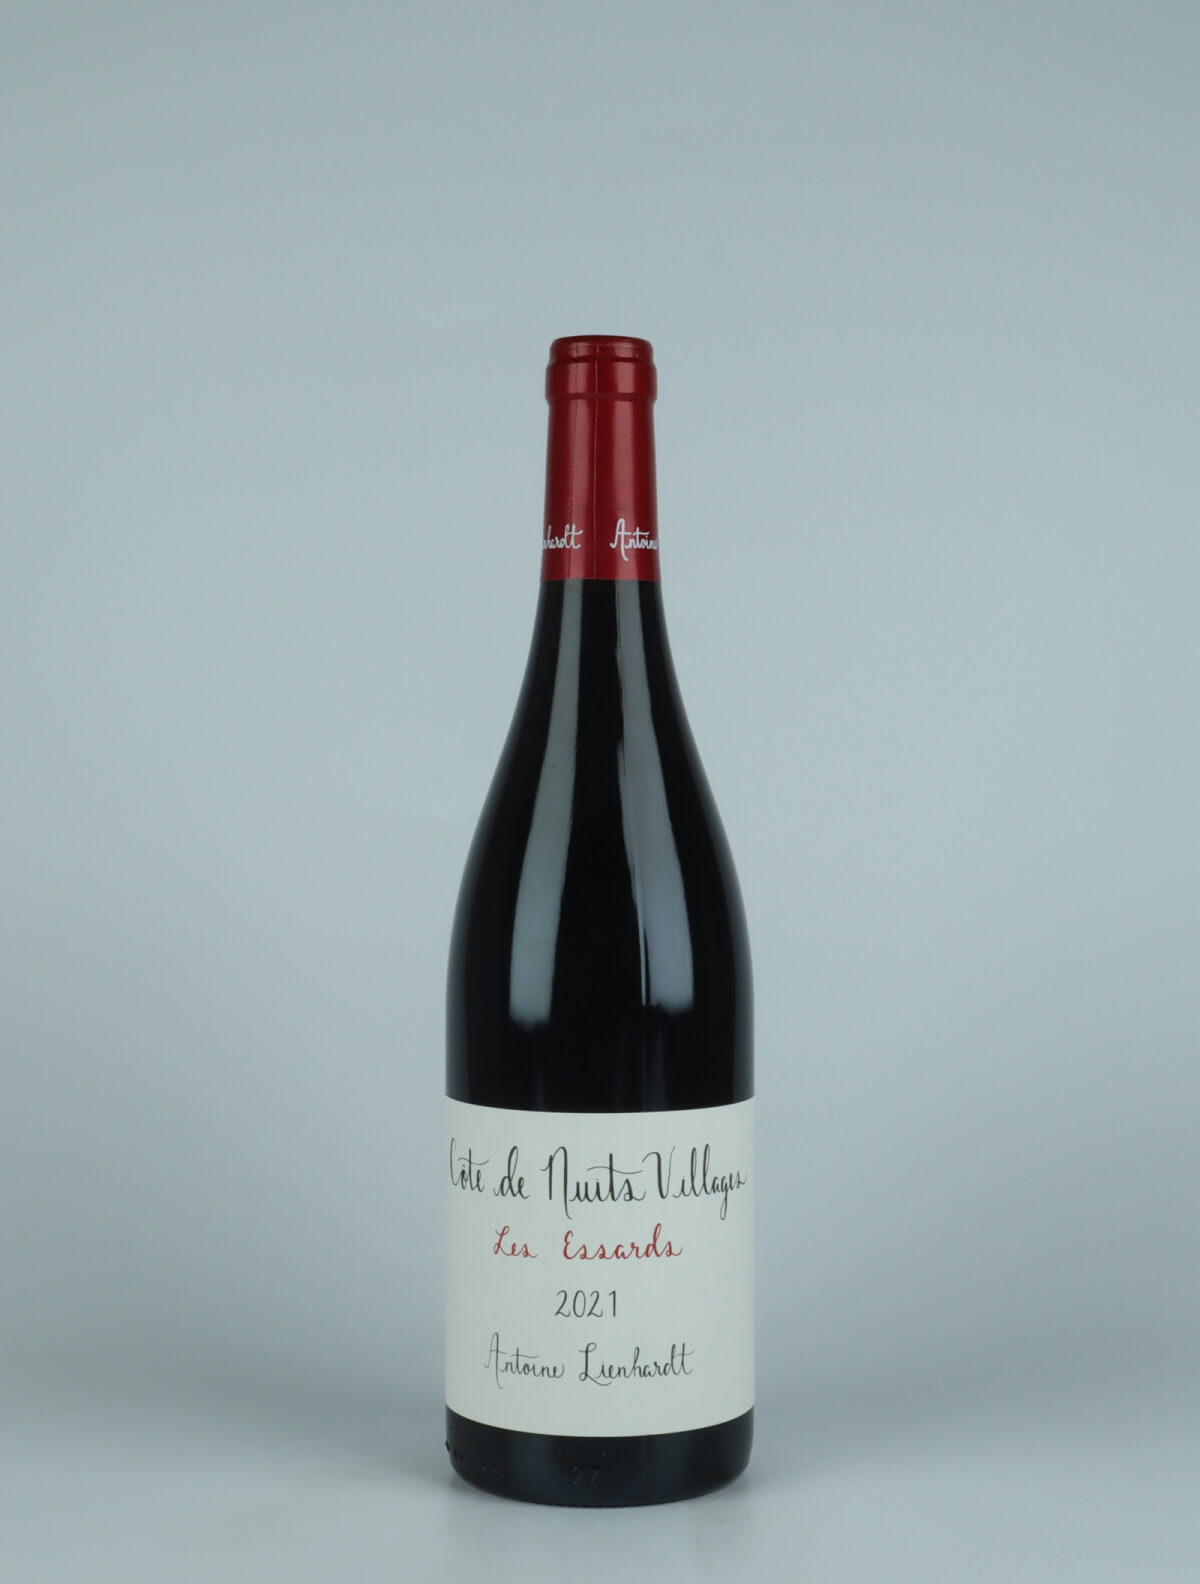 A bottle 2021 Côte de Nuits Villages - Les Essards Red wine from Antoine Lienhardt, Burgundy in France